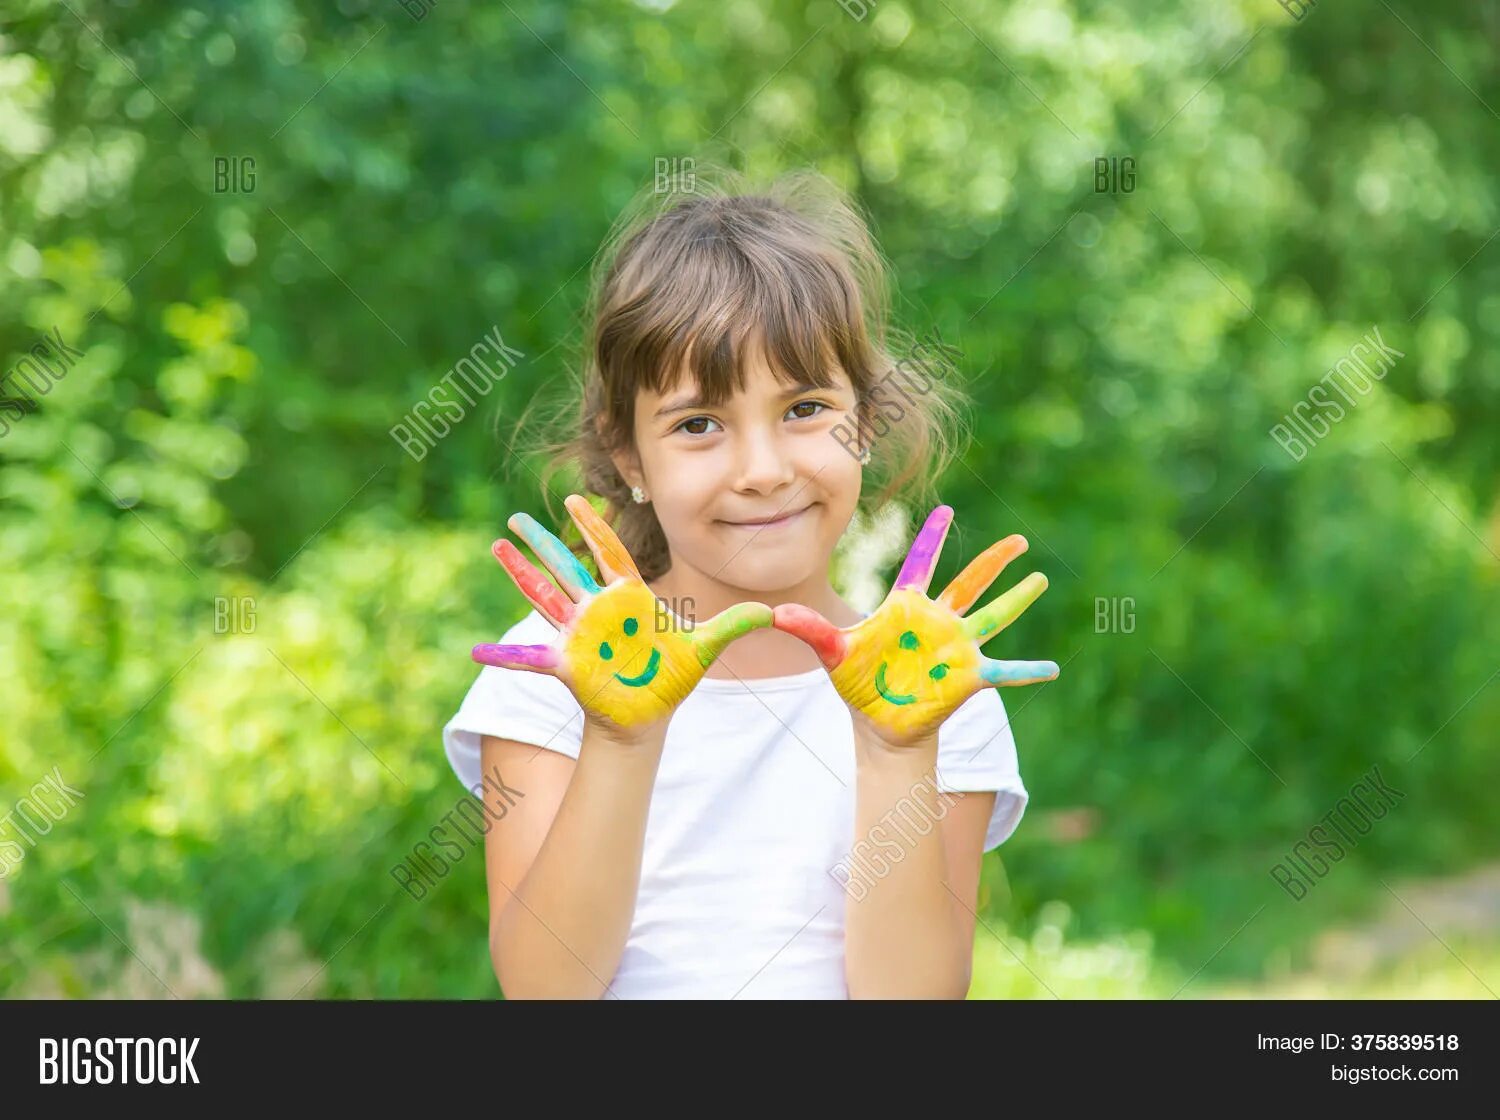 Child focus. Рука и улыбка ребенка. Руки в краске улыбка. Руки детские в краске и улыбкой. Детские руки в краске фото.